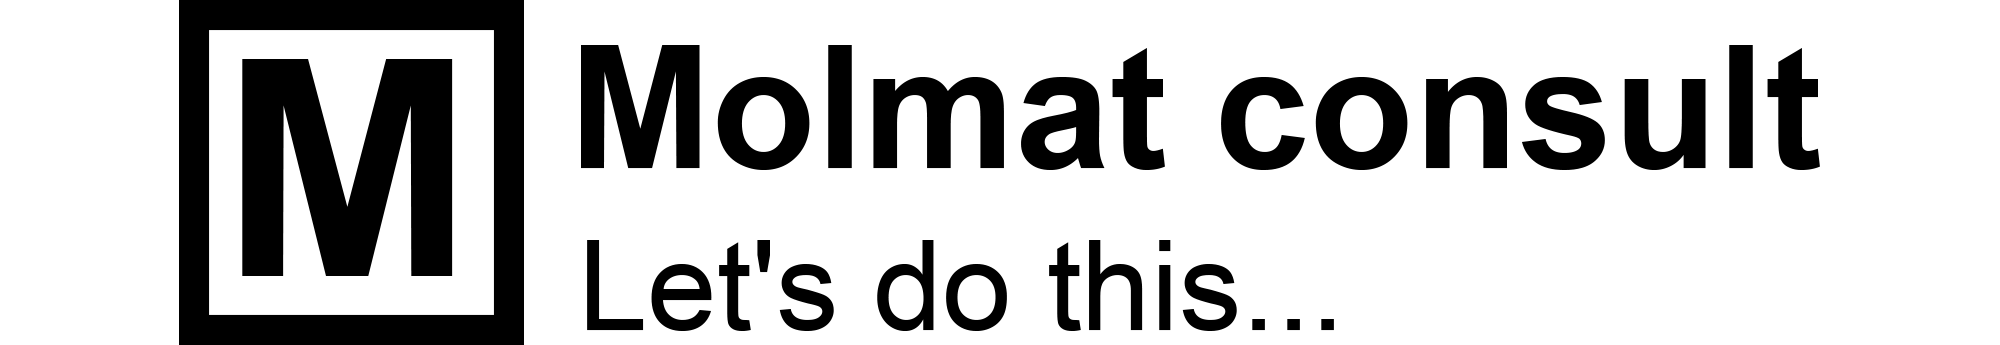 molmatconsult logo